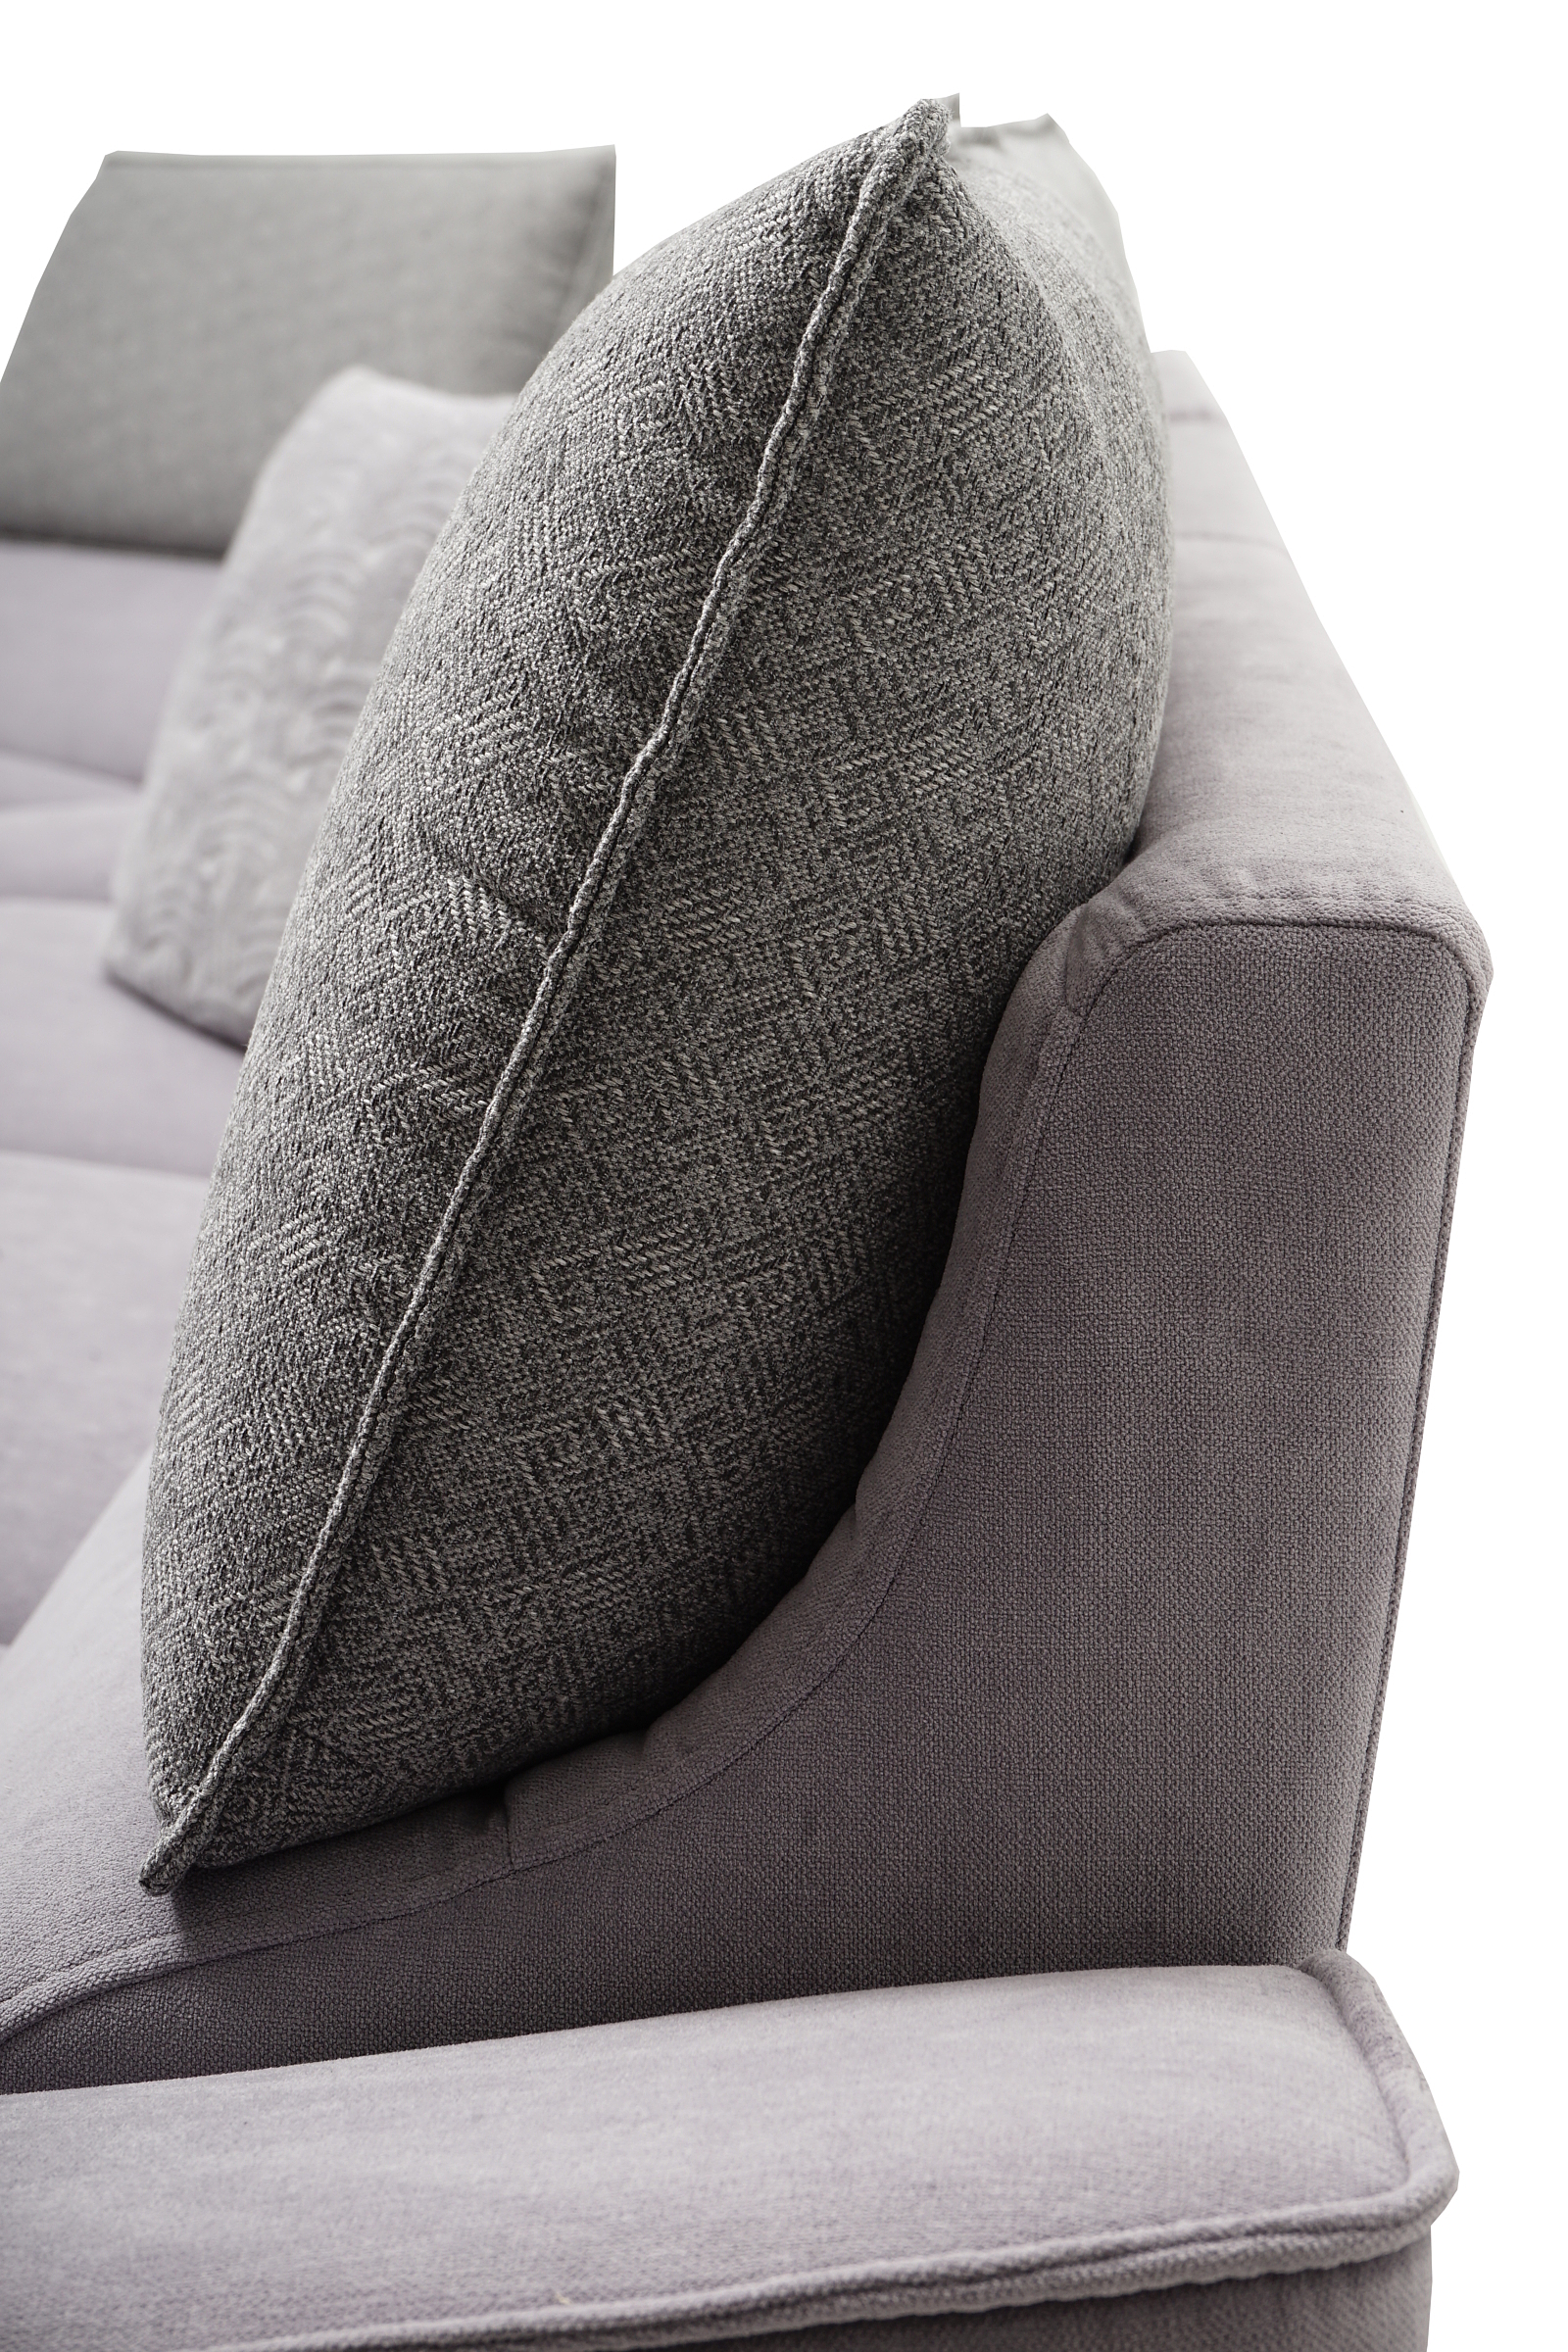 Aviva eleganckka poduszka szara jako element dekoracyjny sofy